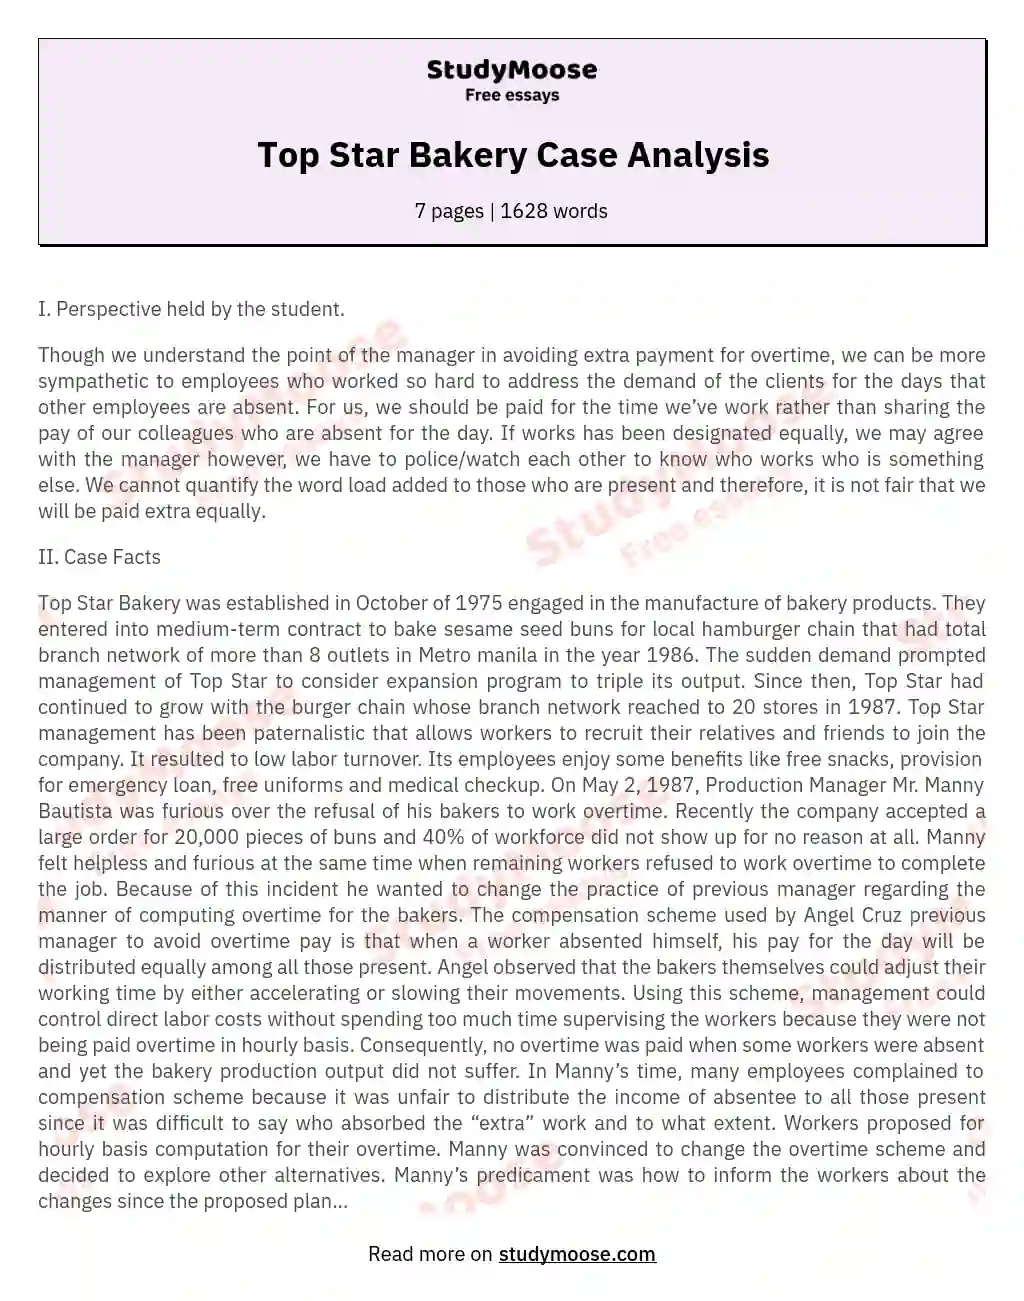 Top Star Bakery Case Analysis essay